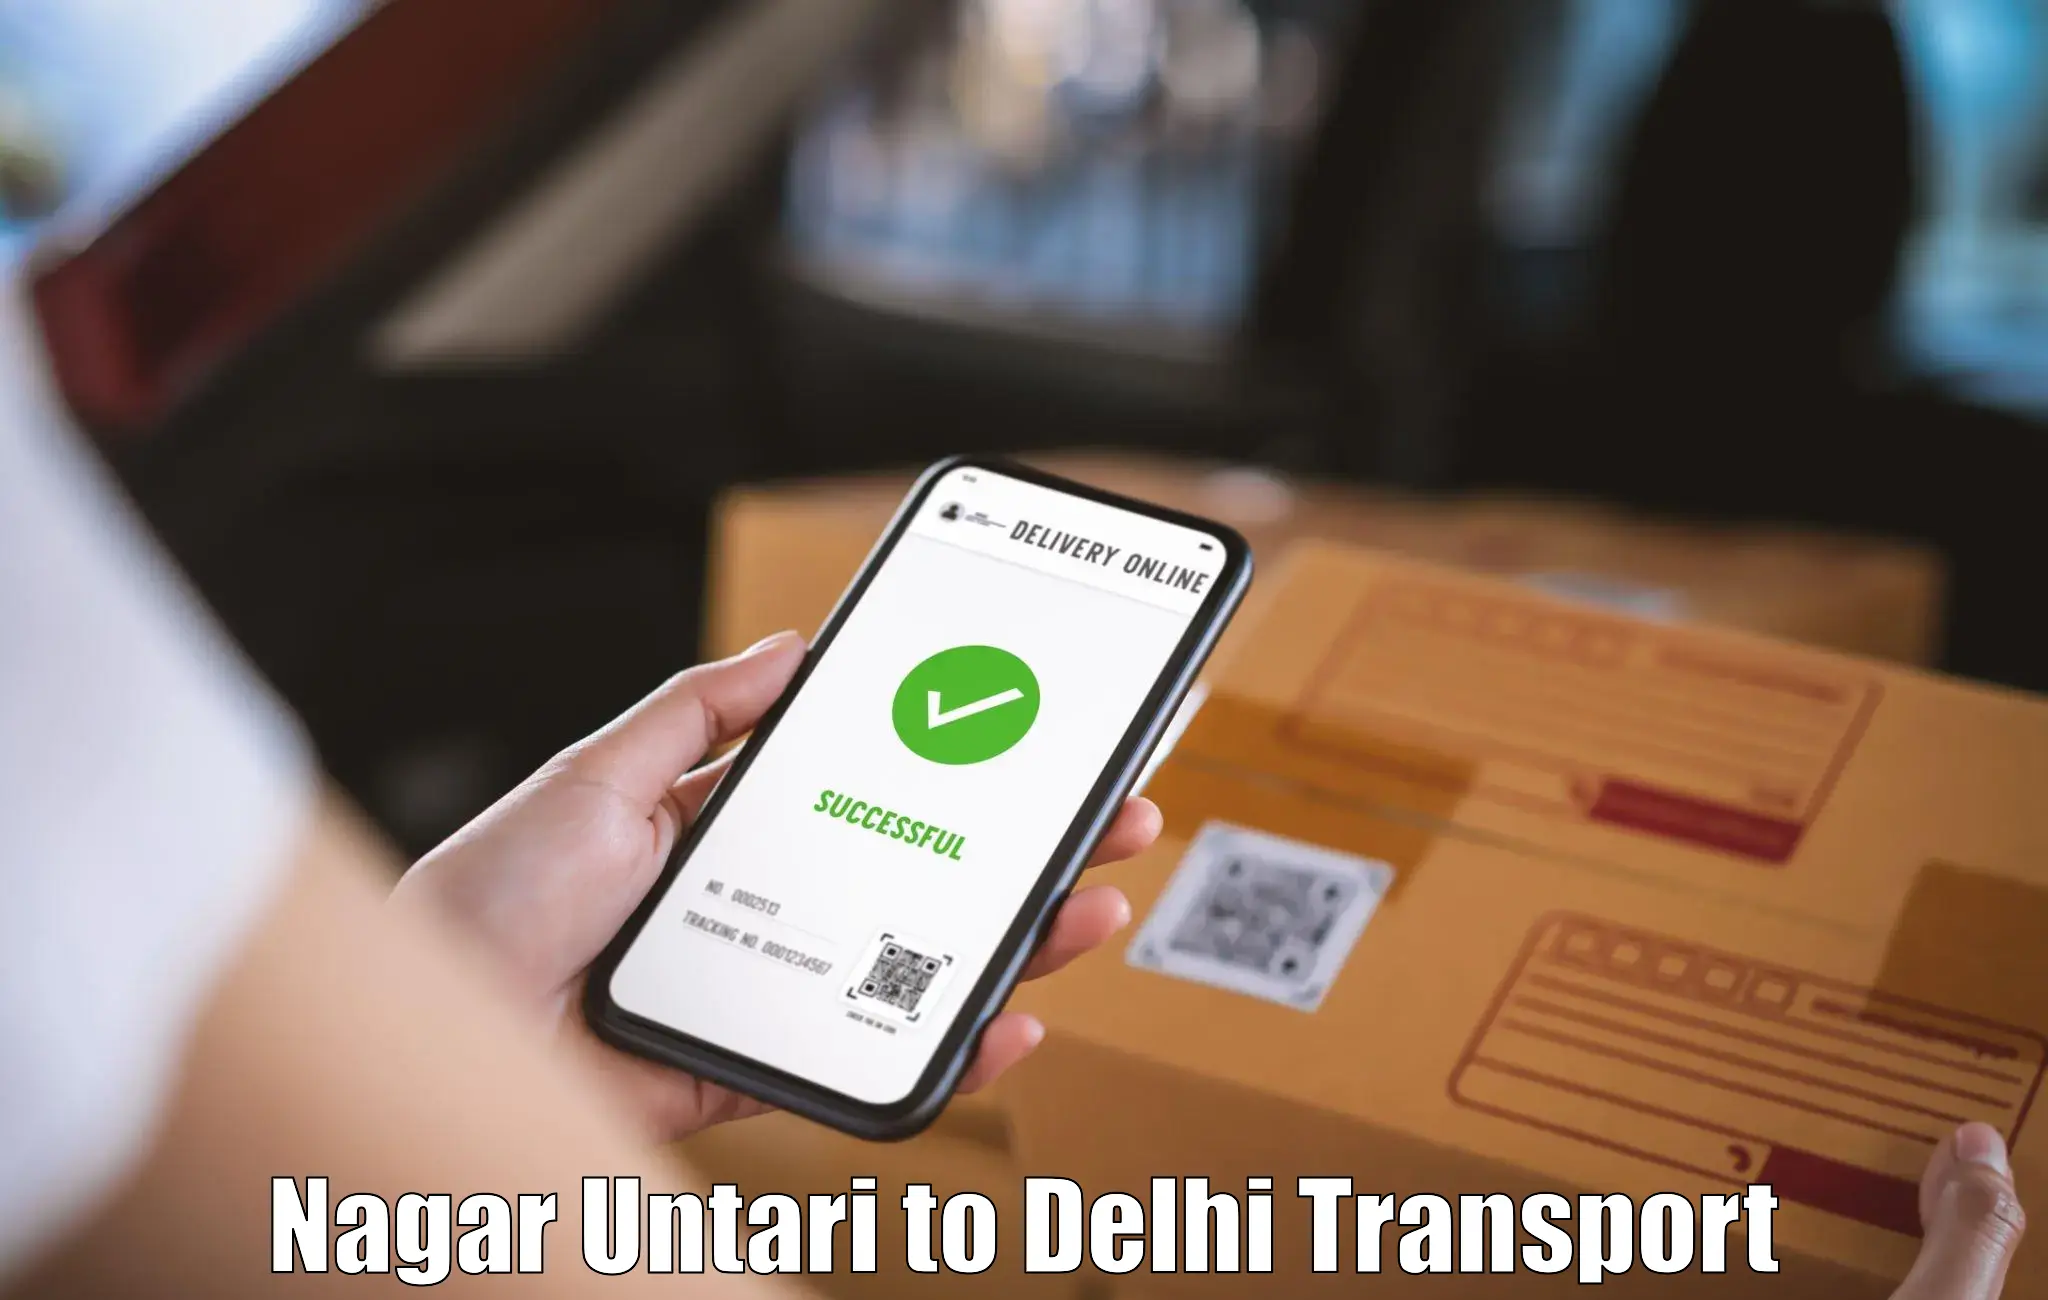 Shipping partner Nagar Untari to Delhi